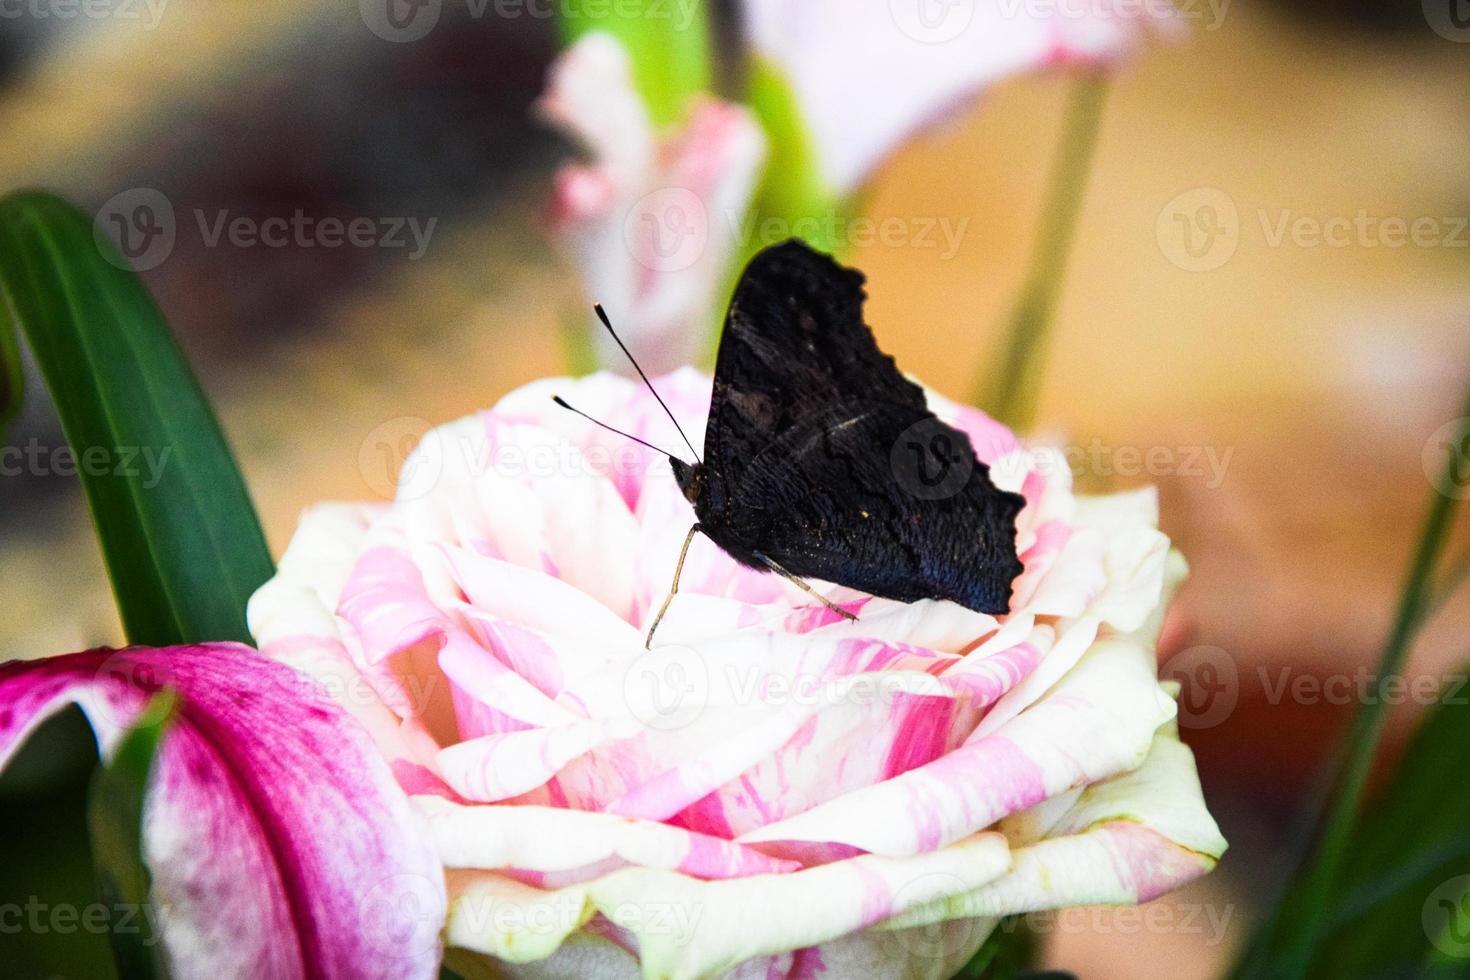 de Europese pauwvlinder op roos foto